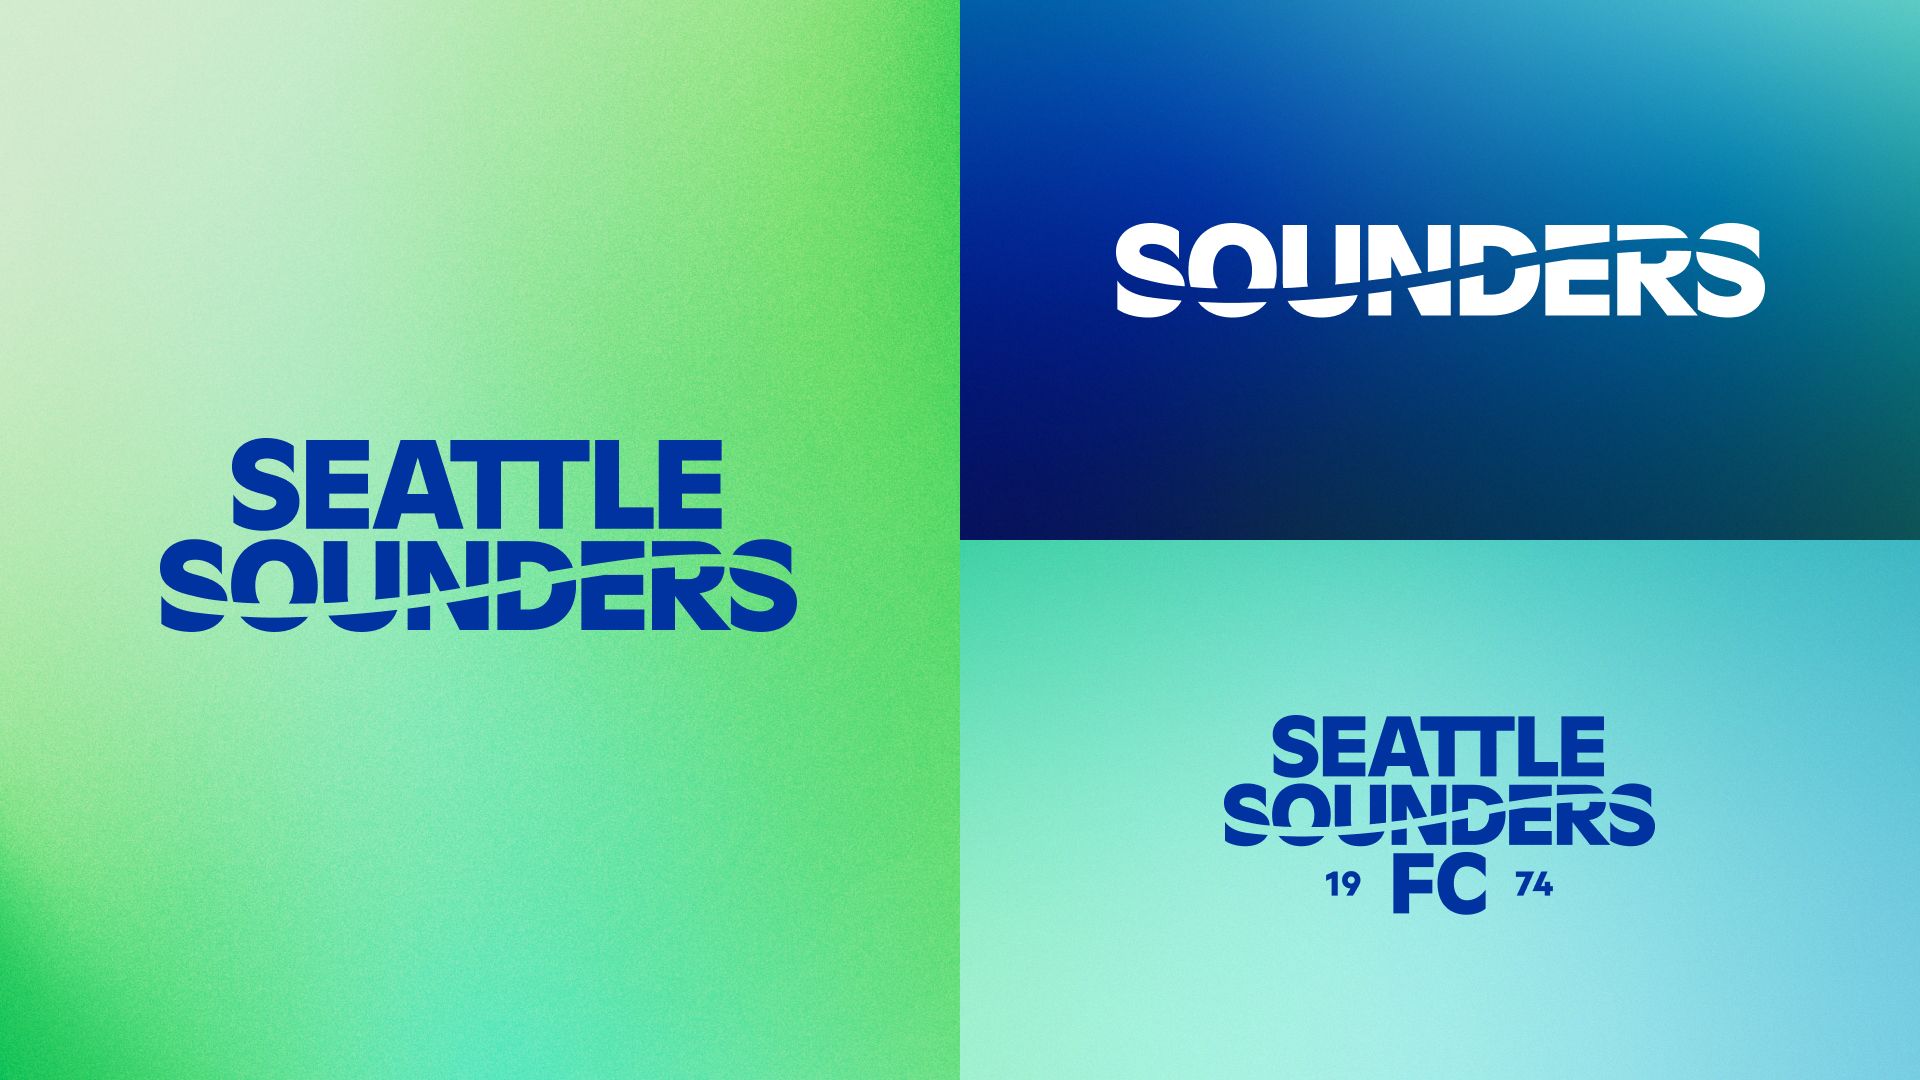 Seattle Sounders | Rebranding | New visual identity 